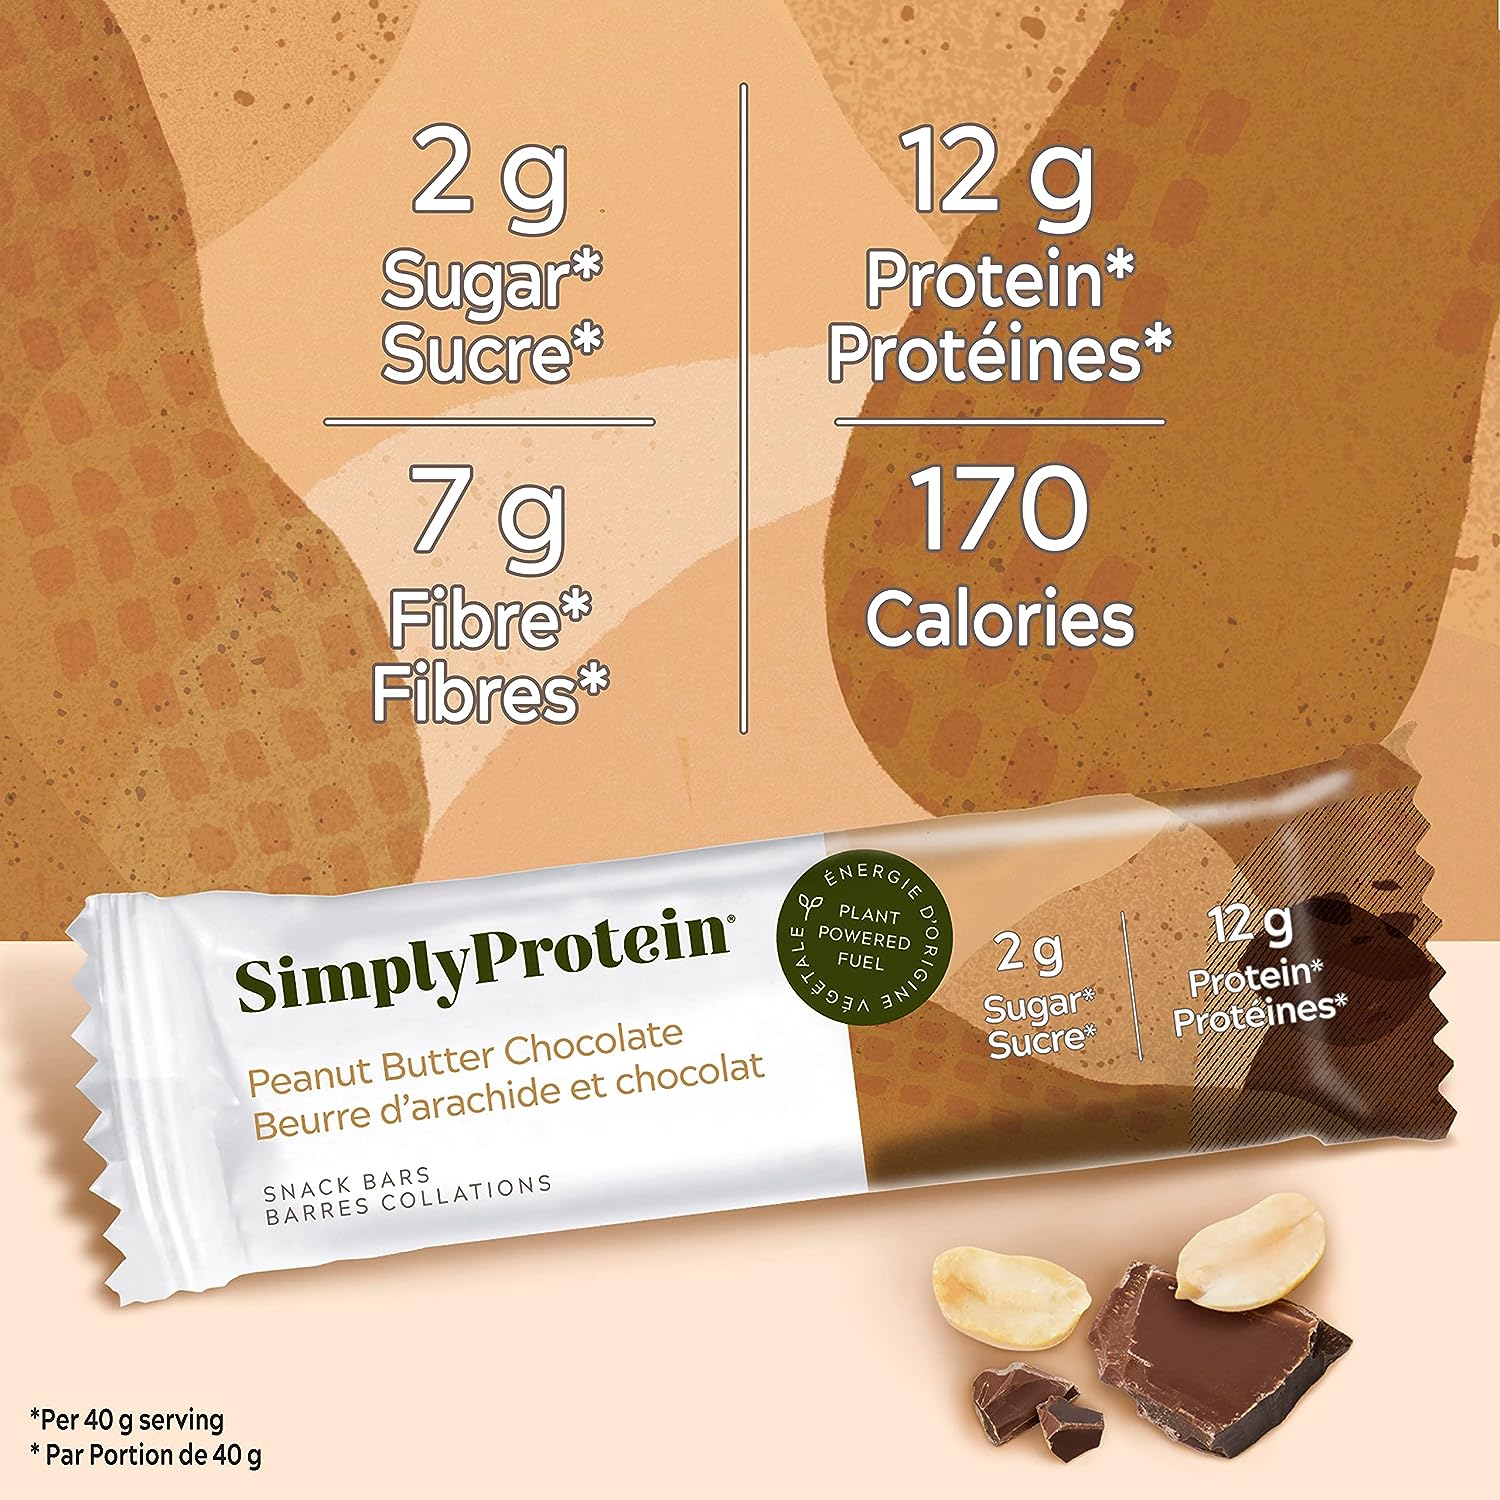 SimplyProtein Protein Snack Bar (1 bar) Protein Snacks Peanut Butter Chocolate SimplyProtein simplyprotein-protein-snack-bar-1-bar